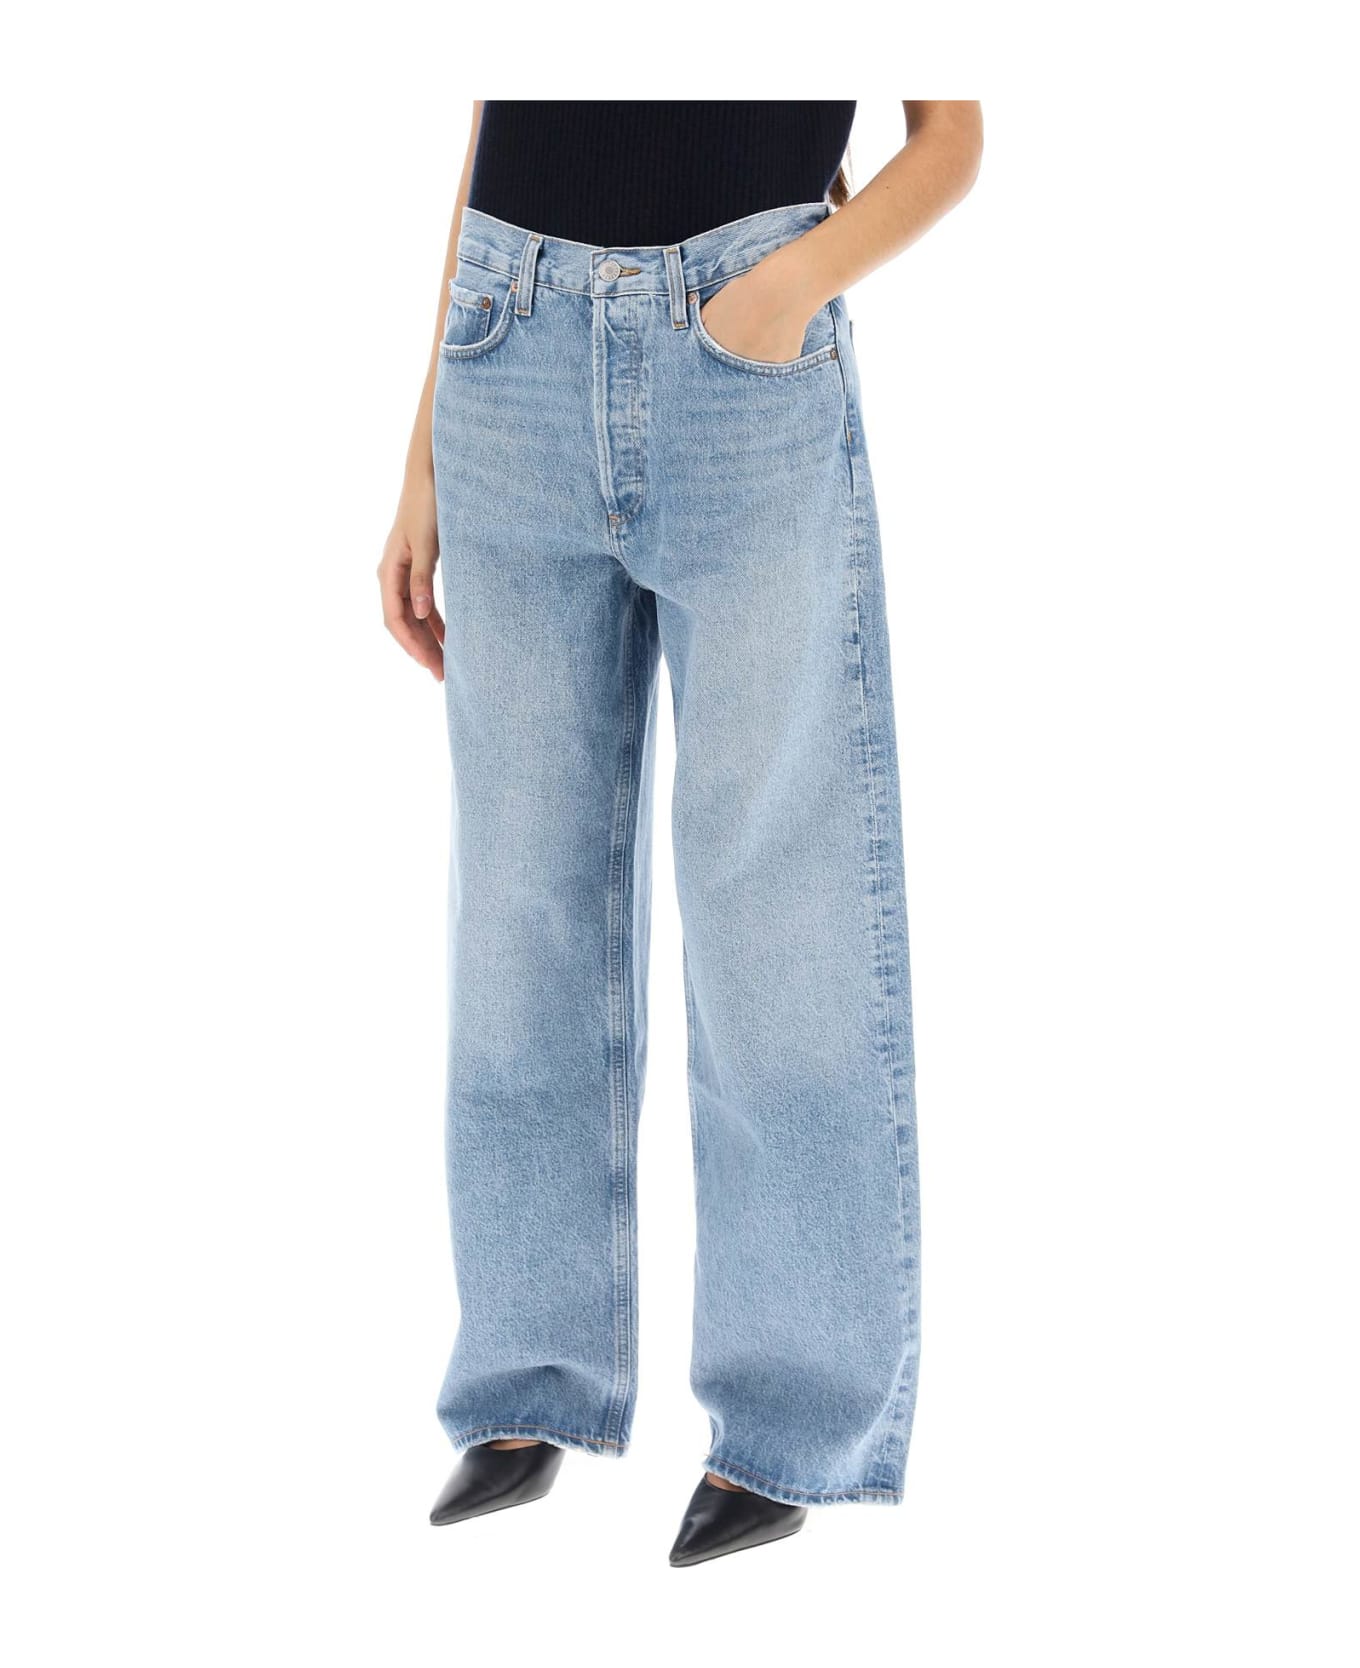 AGOLDE Low Slung Baggy Jeans - LIBERTINE (Light blue)